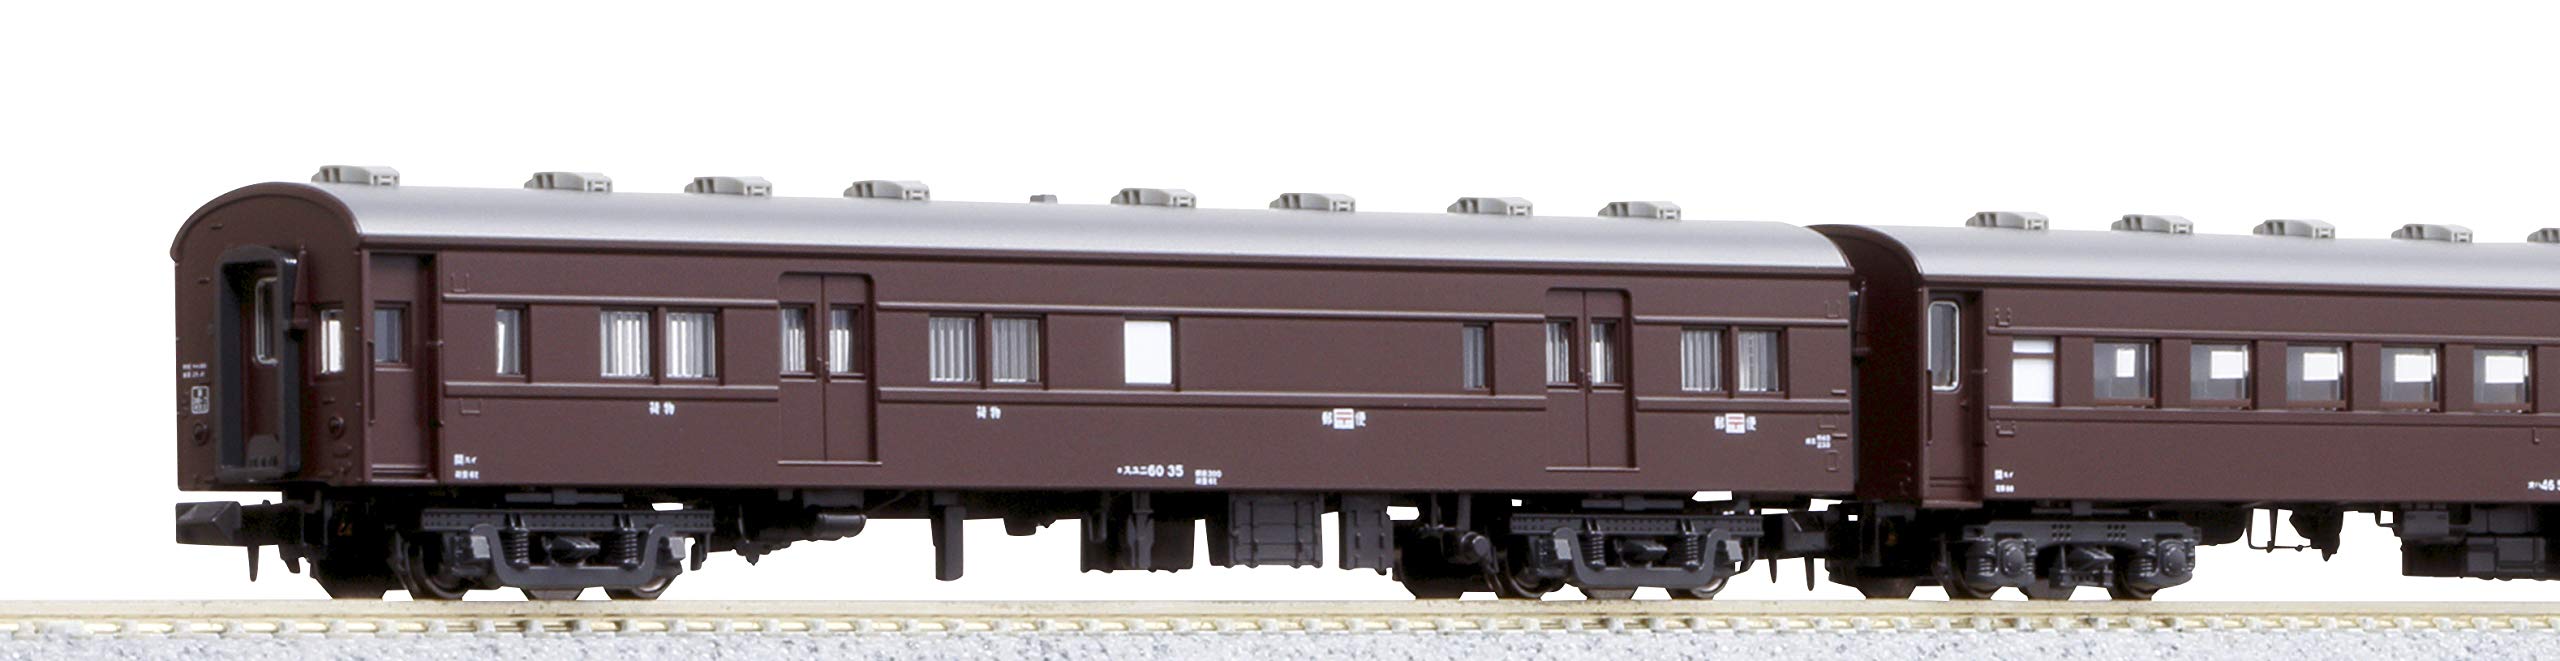 Kato N Gauge 4-Car Set - Old Brown Passenger Railway Model 10-034